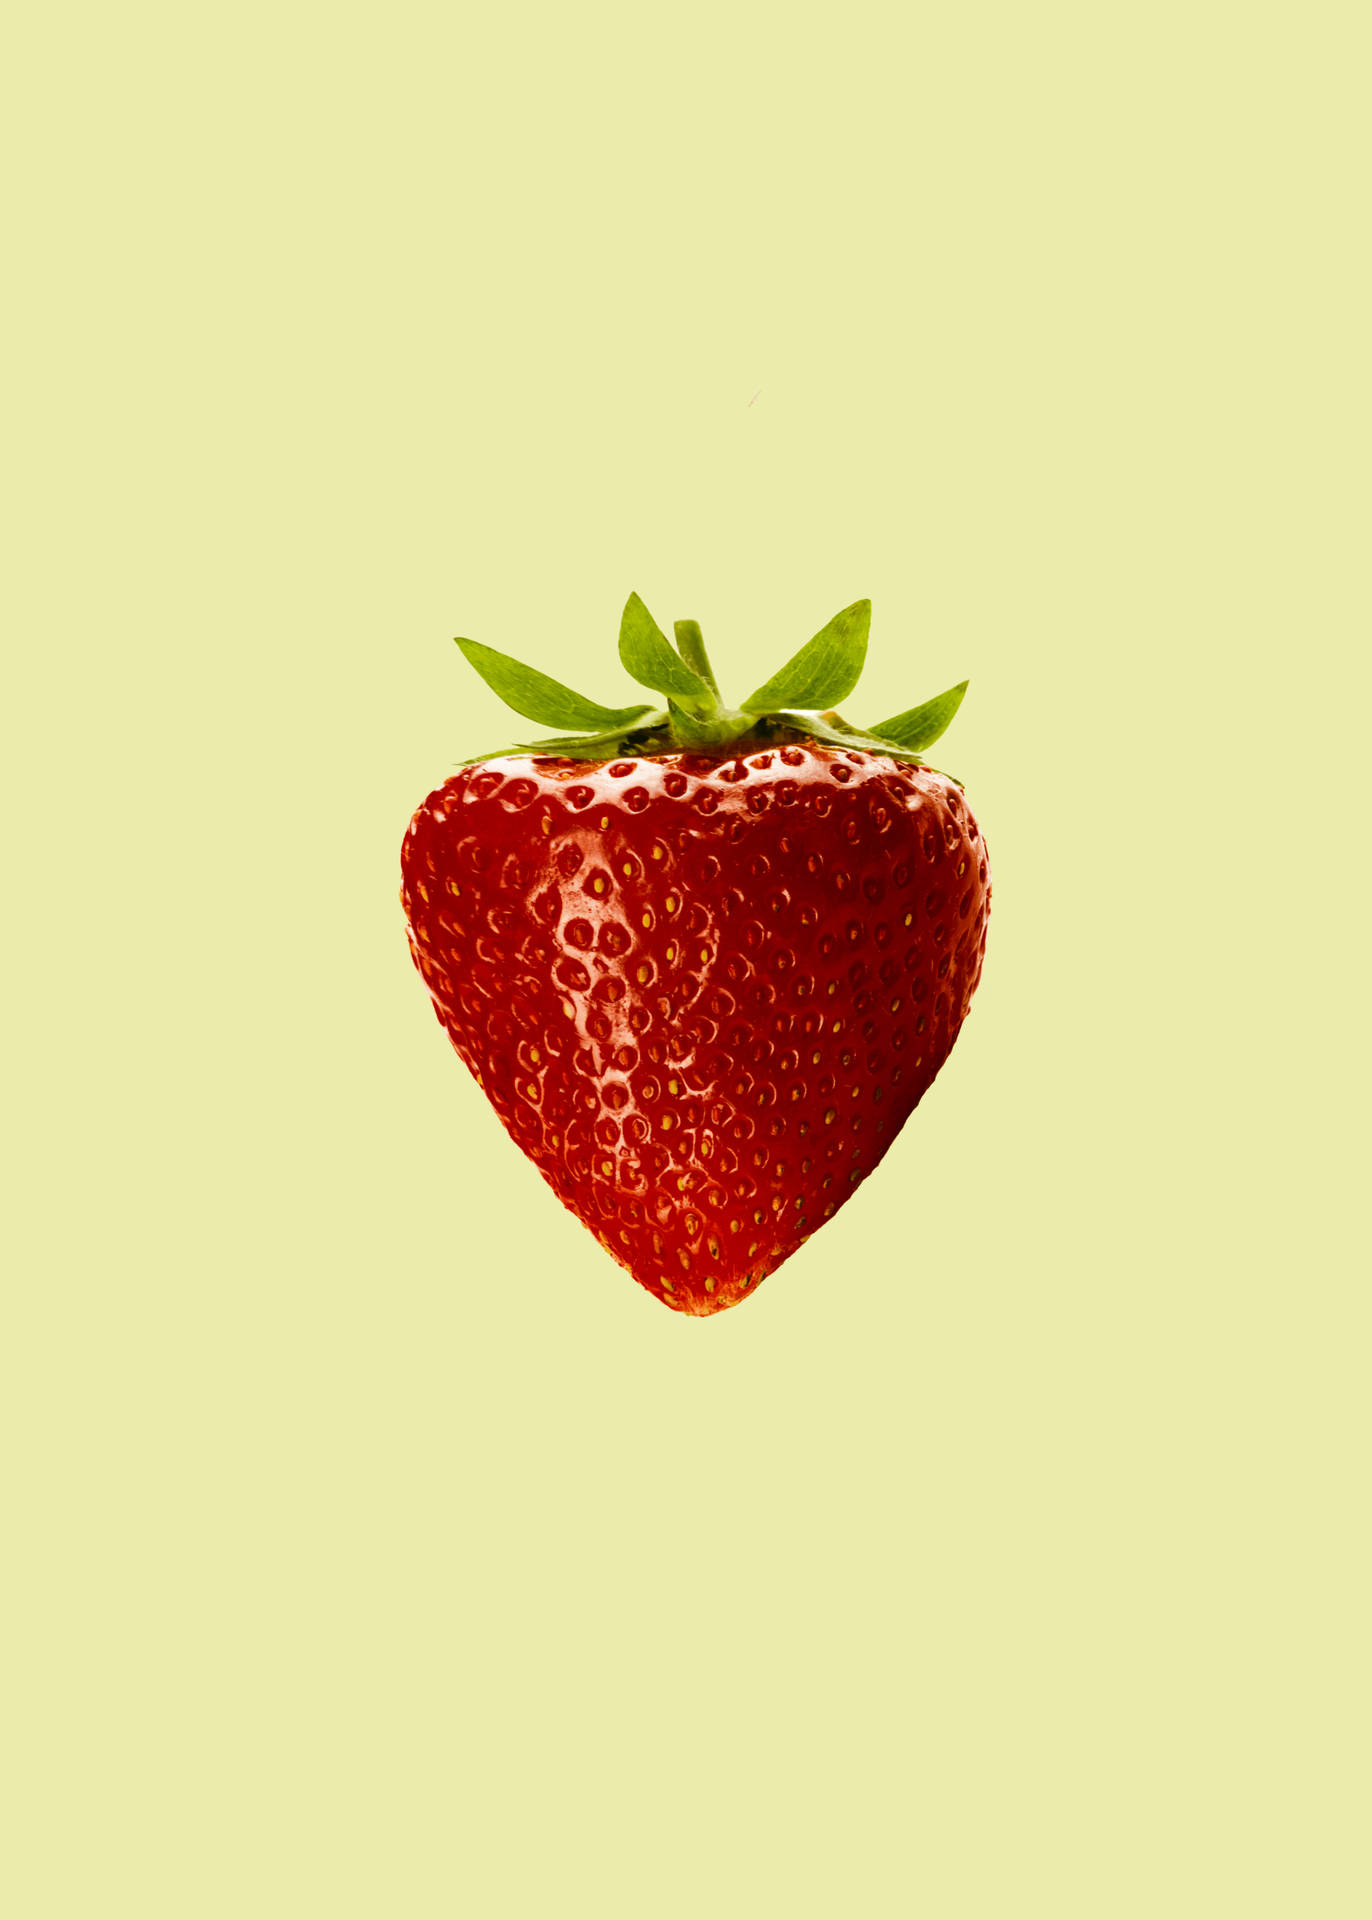 Strawberry Fruit Minimalist Photograph Wallpaper